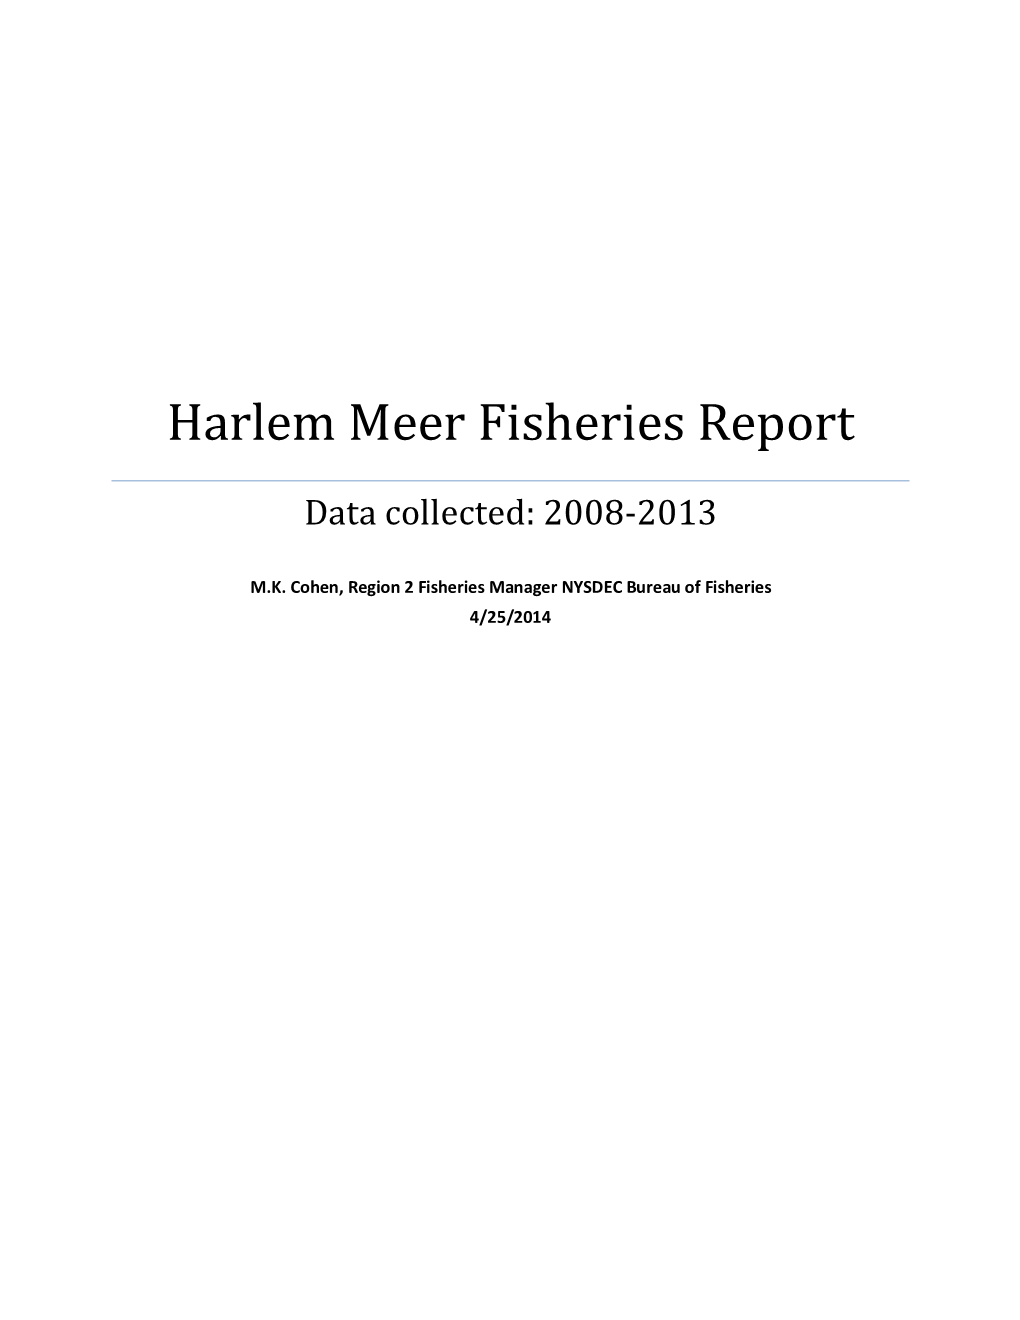 Harlem Meer Fisheries Report (PDF)